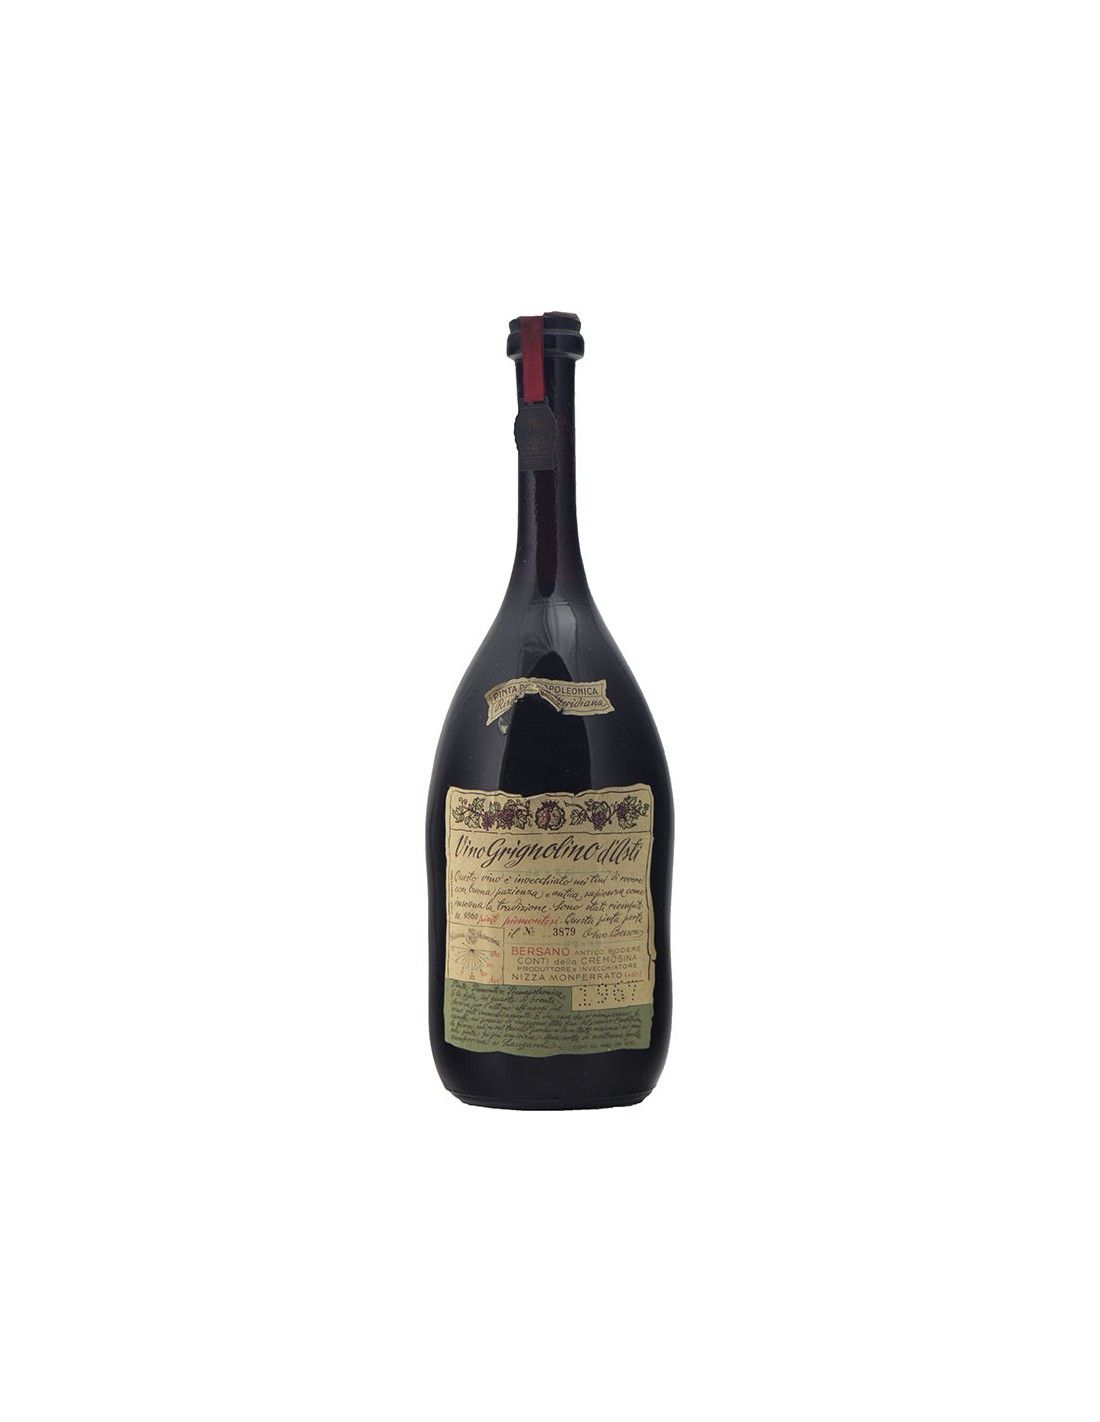 GRIGNOLINO MAGNUM 1967 BERSANO Grandi Bottiglie